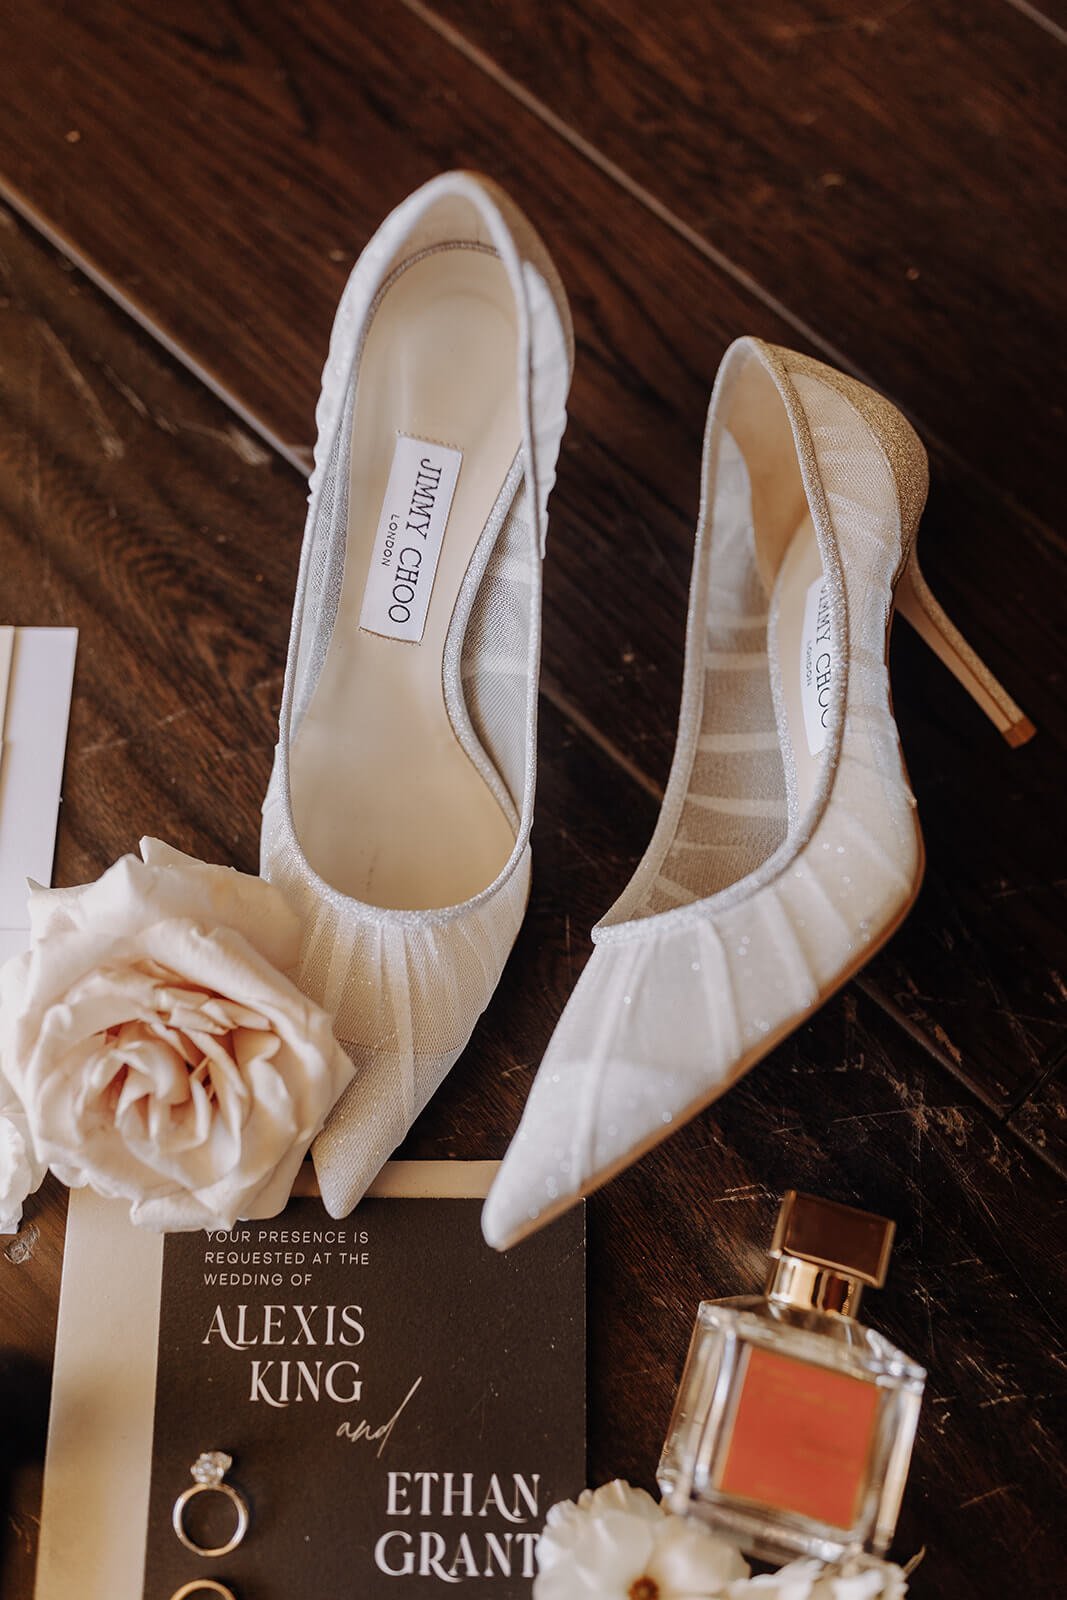 Jimmy Choo bridal shoes with luxury wedding invitation